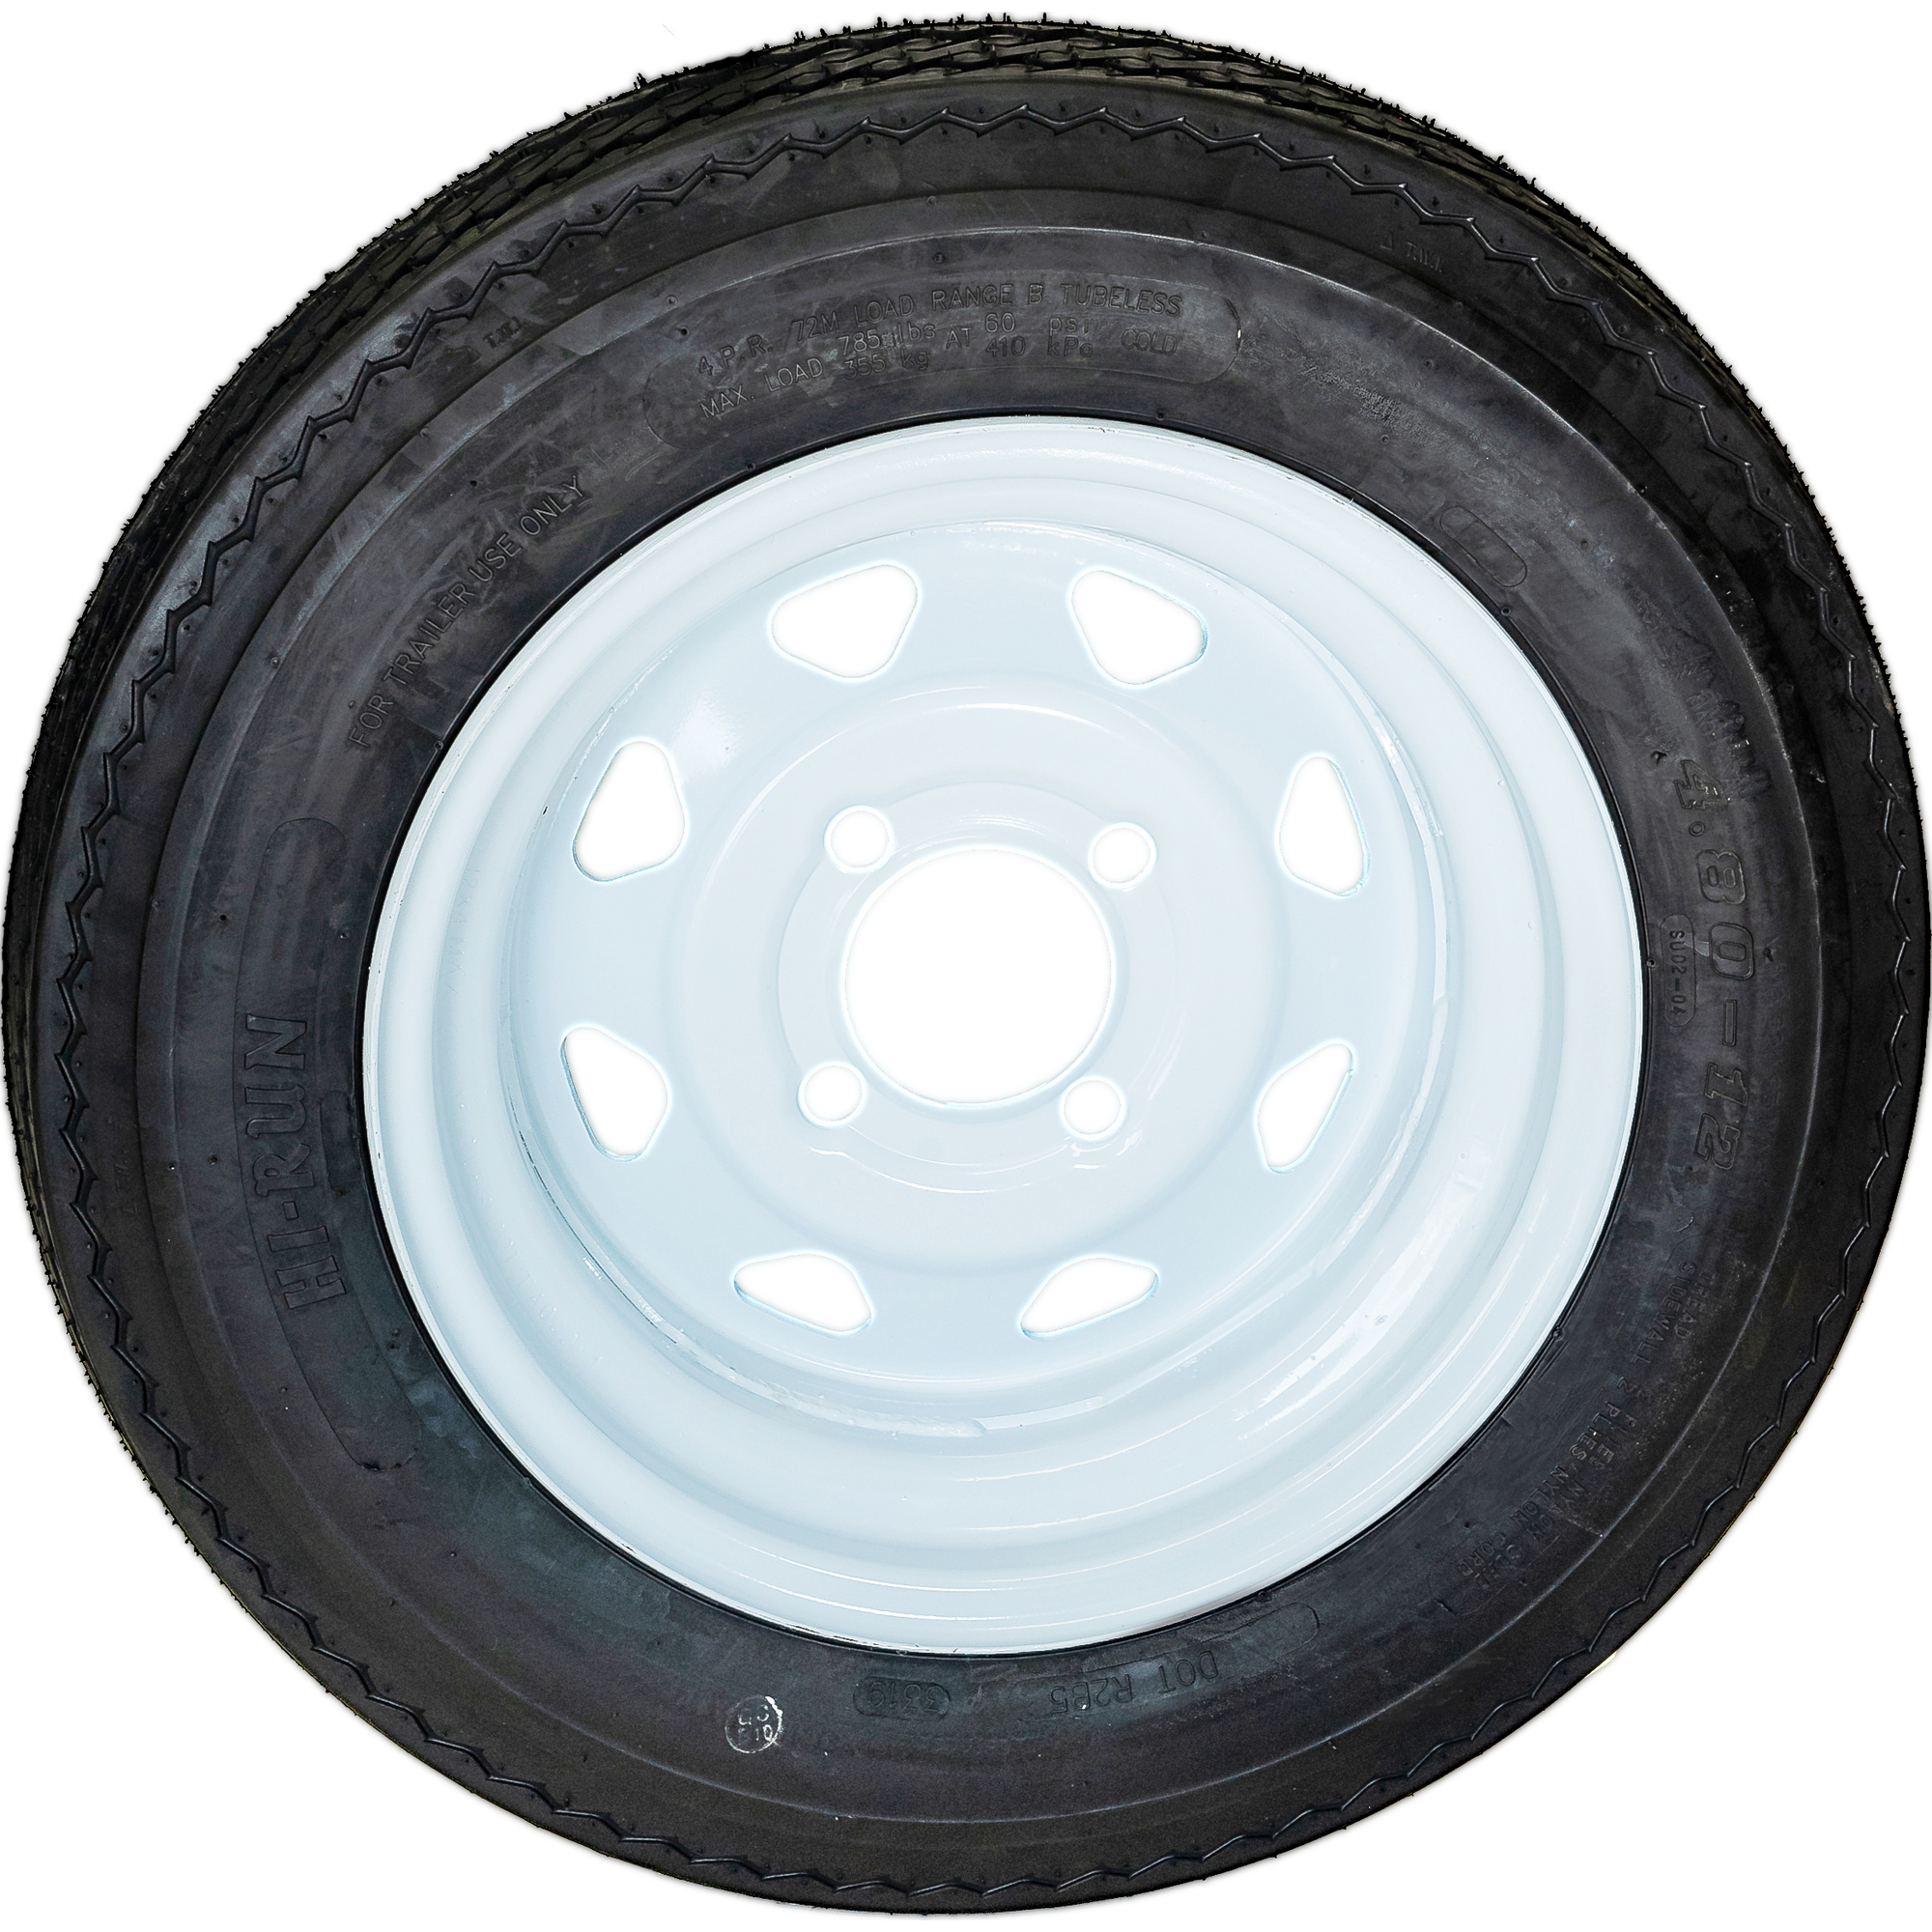 HI-RUN, Highway Trailer Tire Assembly, Bias-Ply, Tire Size 4.80-12 Load Range Rating B, Bolt Holes (qty.) 4 Model ASB1051